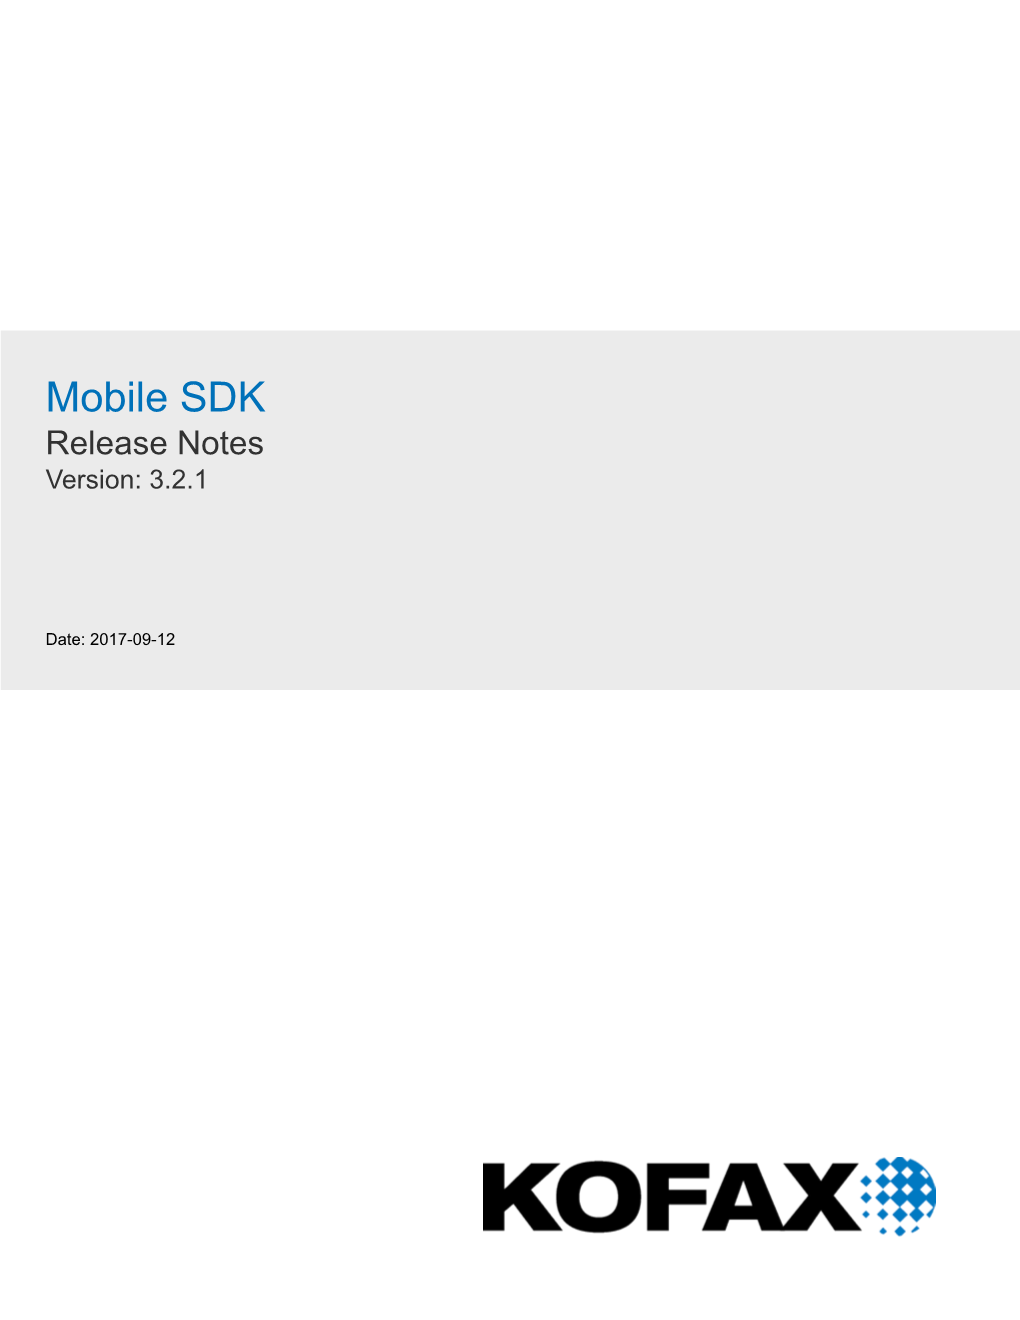 Mobile SDK Release Notes Version: 3.2.1